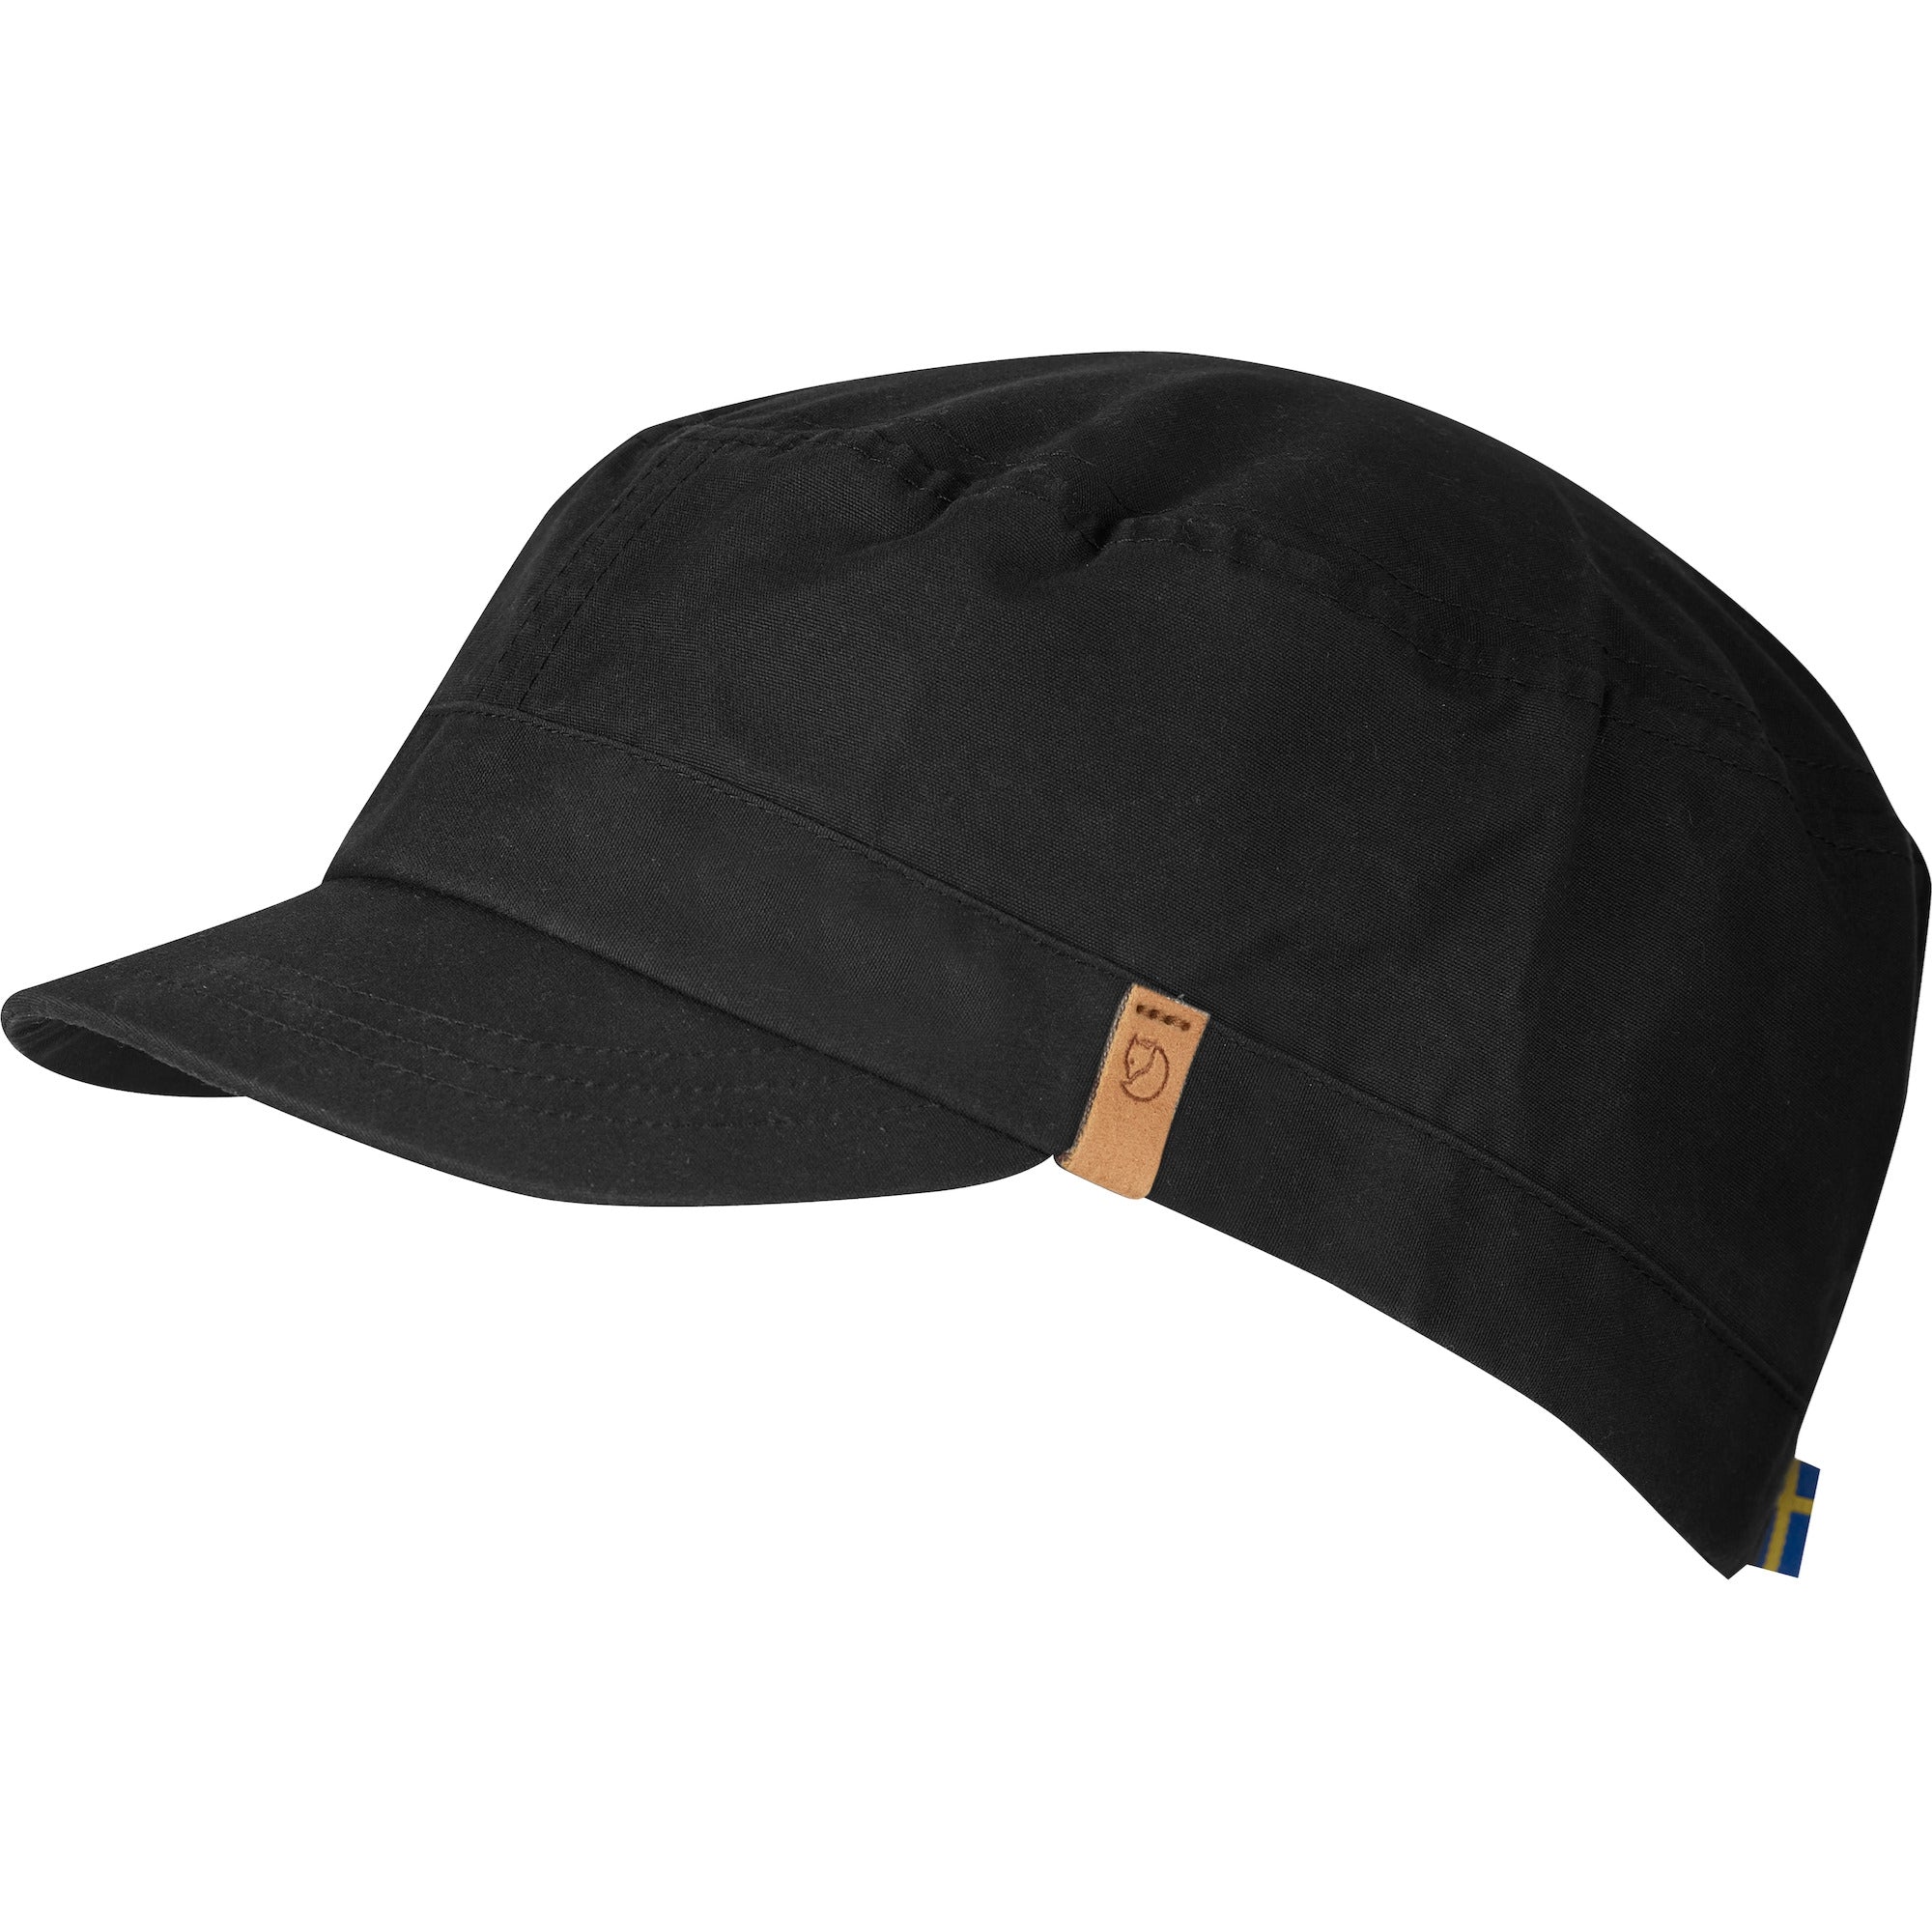 Fjallraven Singi Trekking Cap 棒球帽 77279-550 黑色